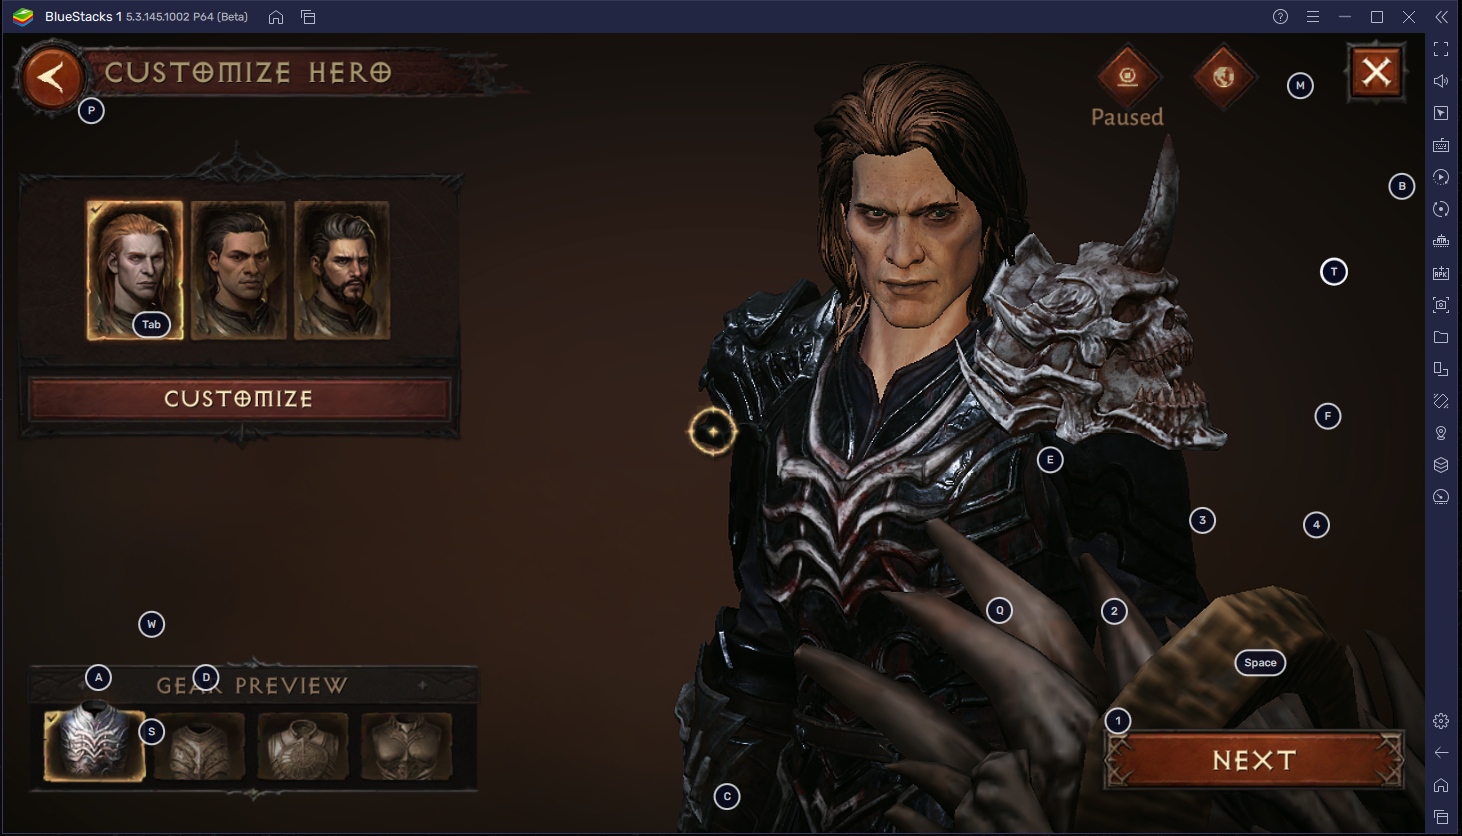 Cara Bermain Diablo Immortal di PC Menggunakan Emulator BlueStacks!